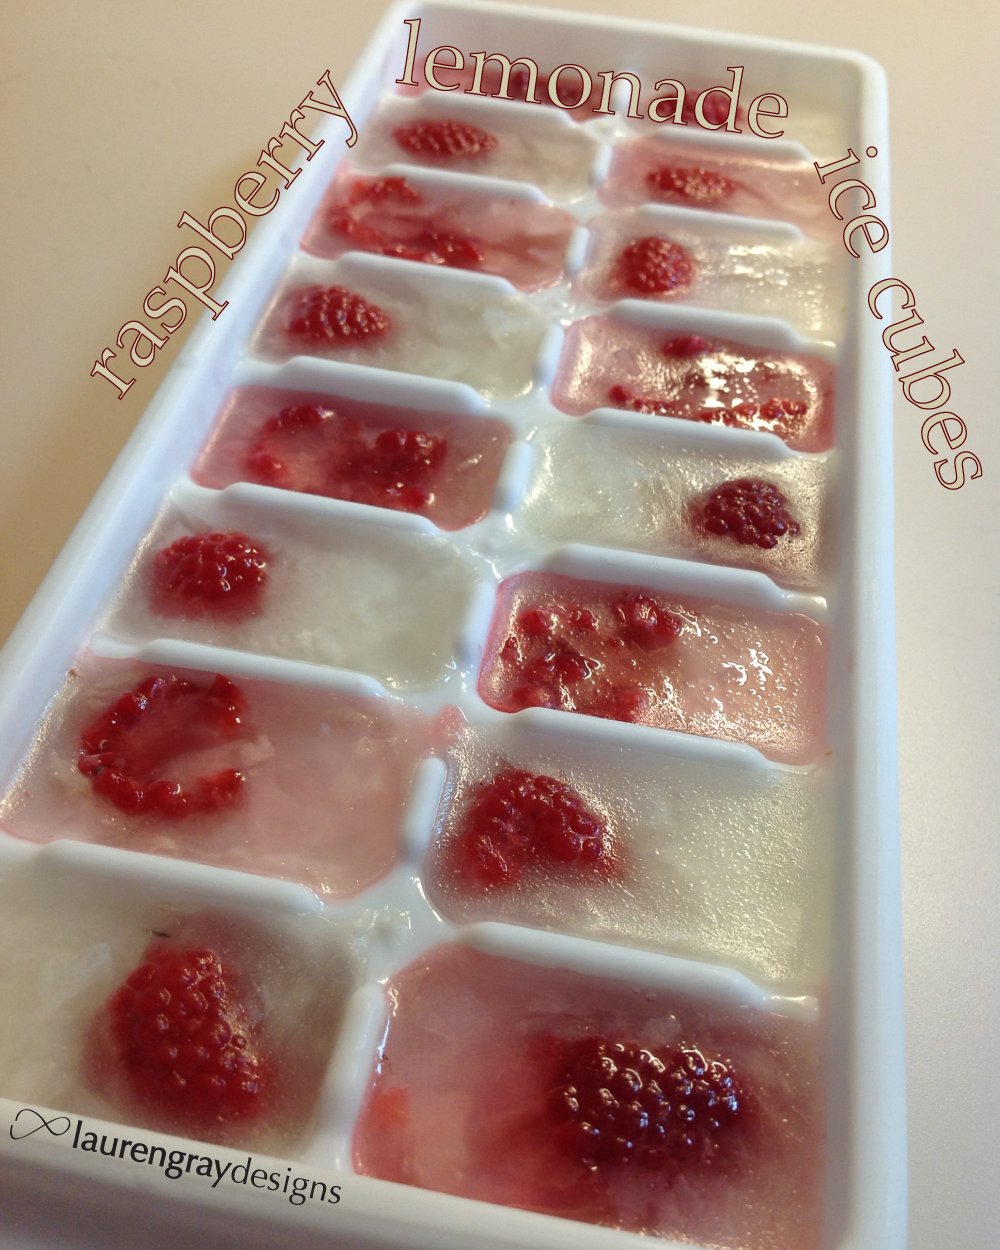 Smash up some raspberries in lemonade to make decorative ice cubes for summertime lemonade!